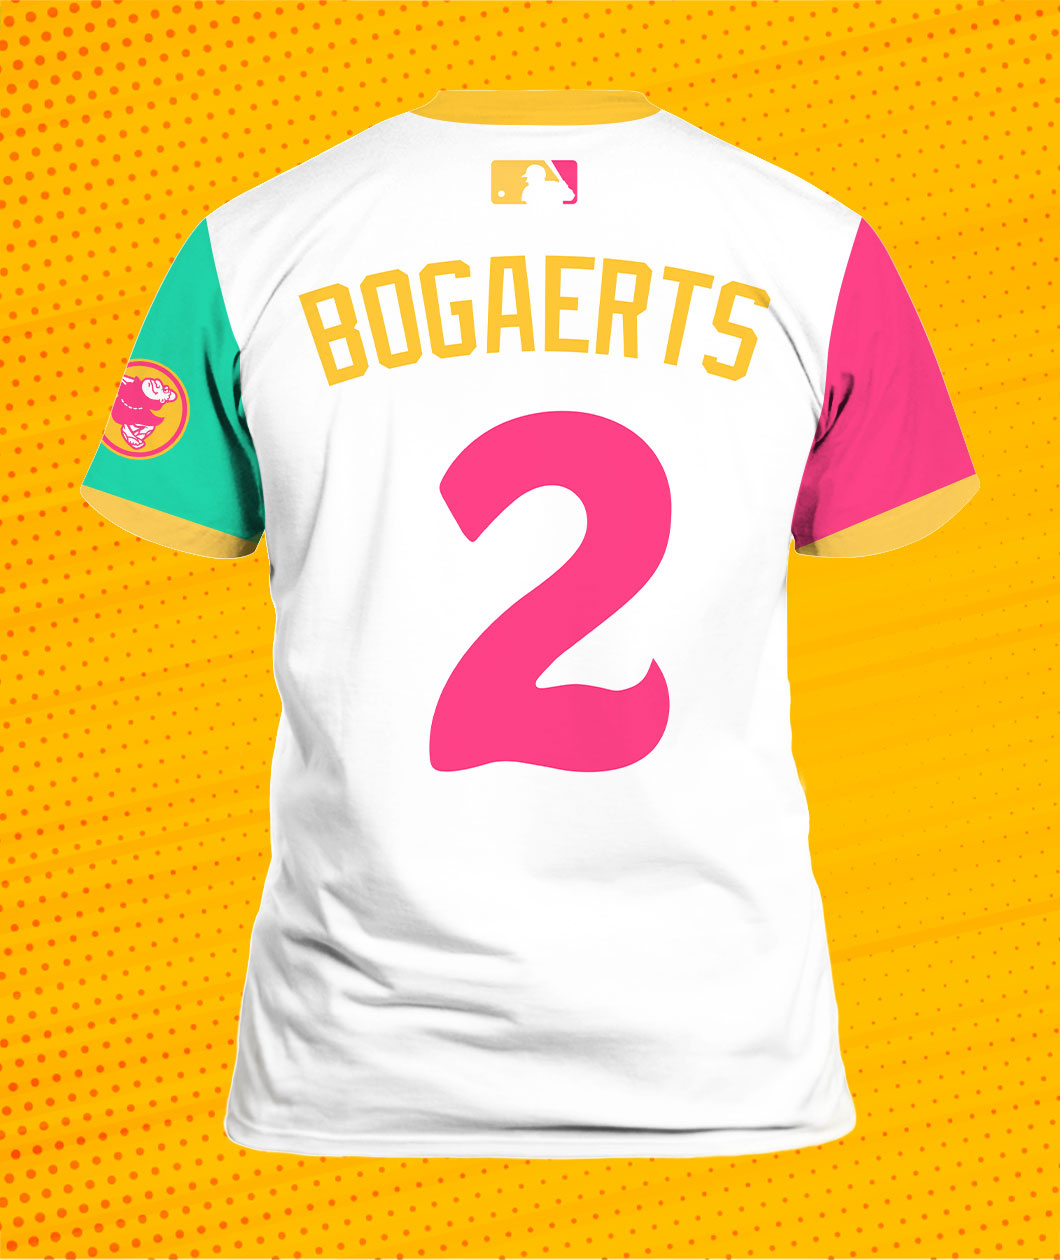 Xander Bogaerts Favorite Baseball Player Fan Shirt, hoodie